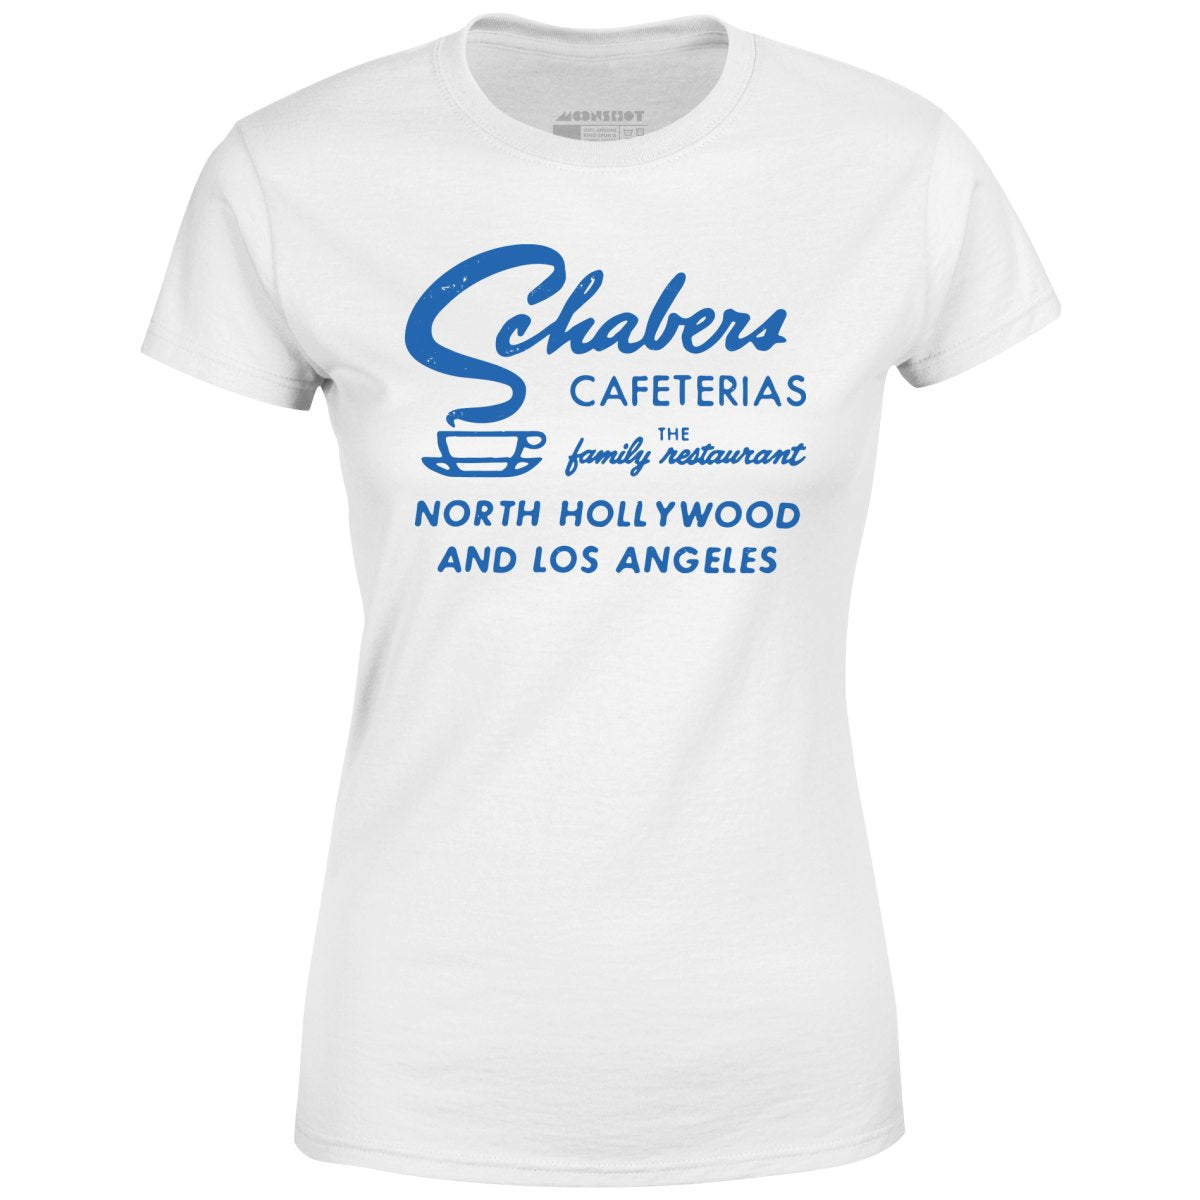 Schabers Cafeterias - Los Angeles, CA - Vintage Restaurant - Women's T-Shirt